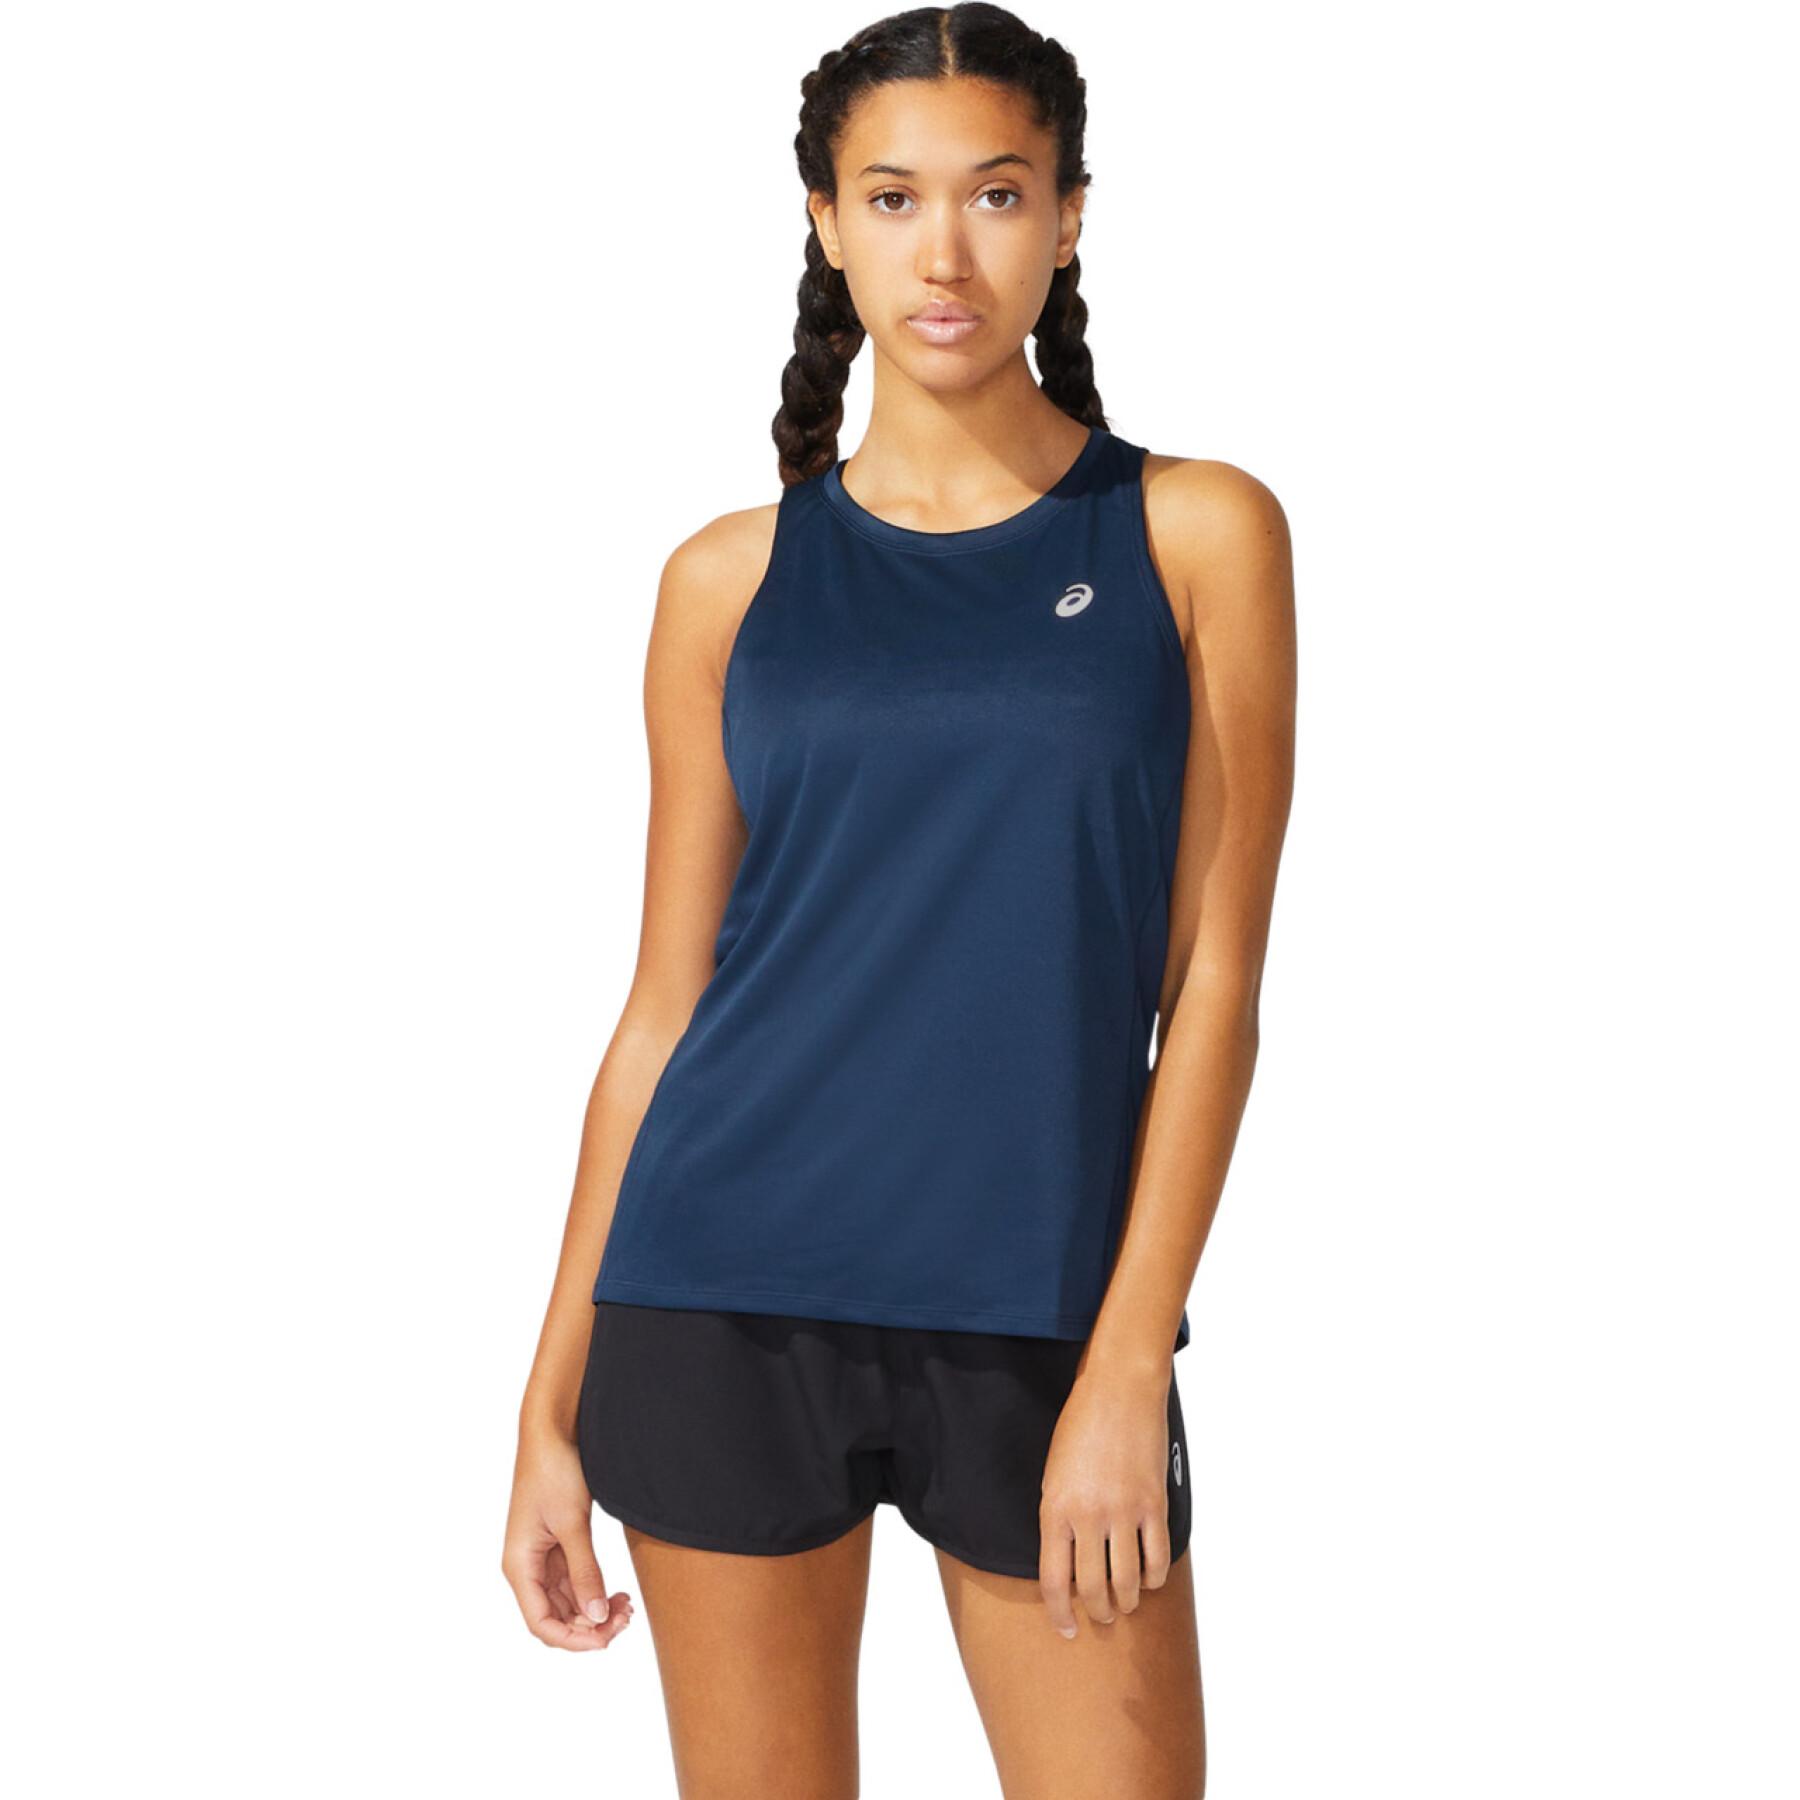 Women\'s tank top - Jerseys textiles Asics - Core Women\'s Running and - t-shirts